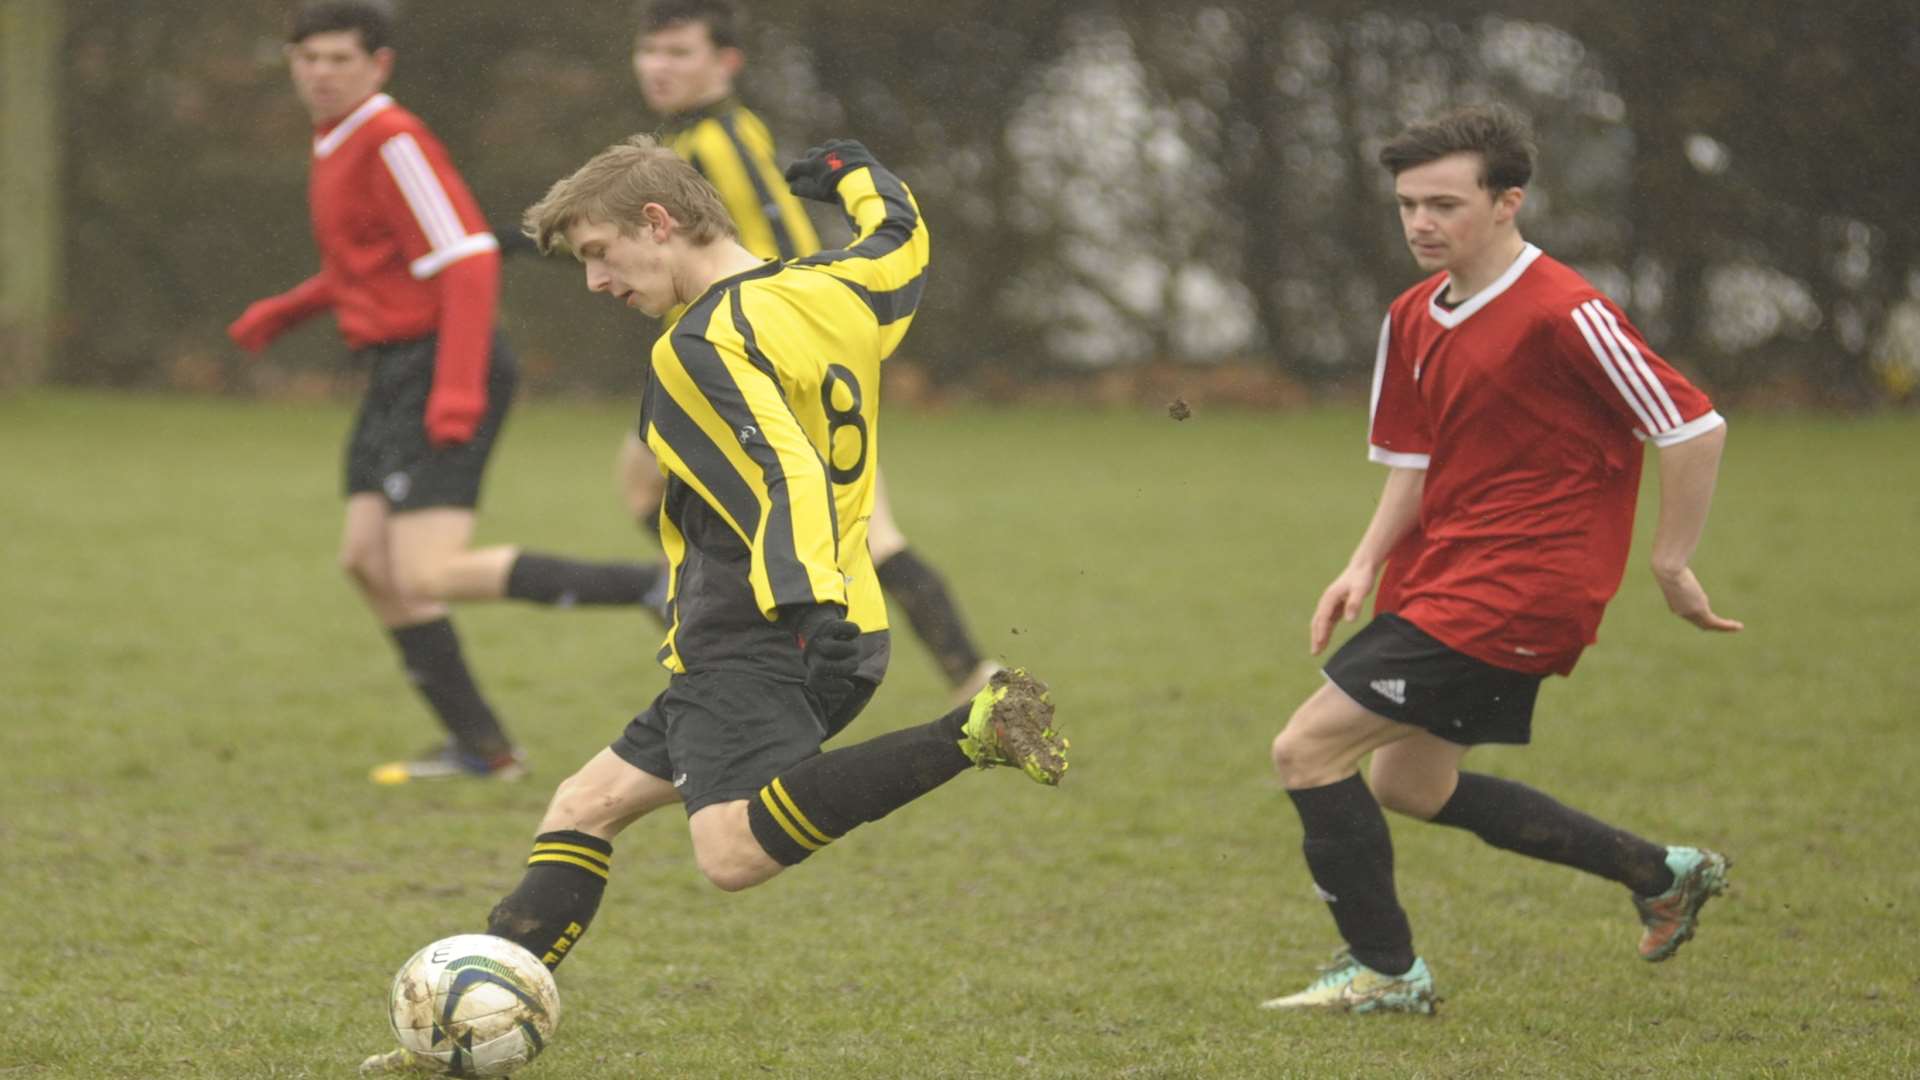 Rainham Eagles under-18s (yellow) up against Thamesview Rangers in Division 3 Picture: Steve Crispe